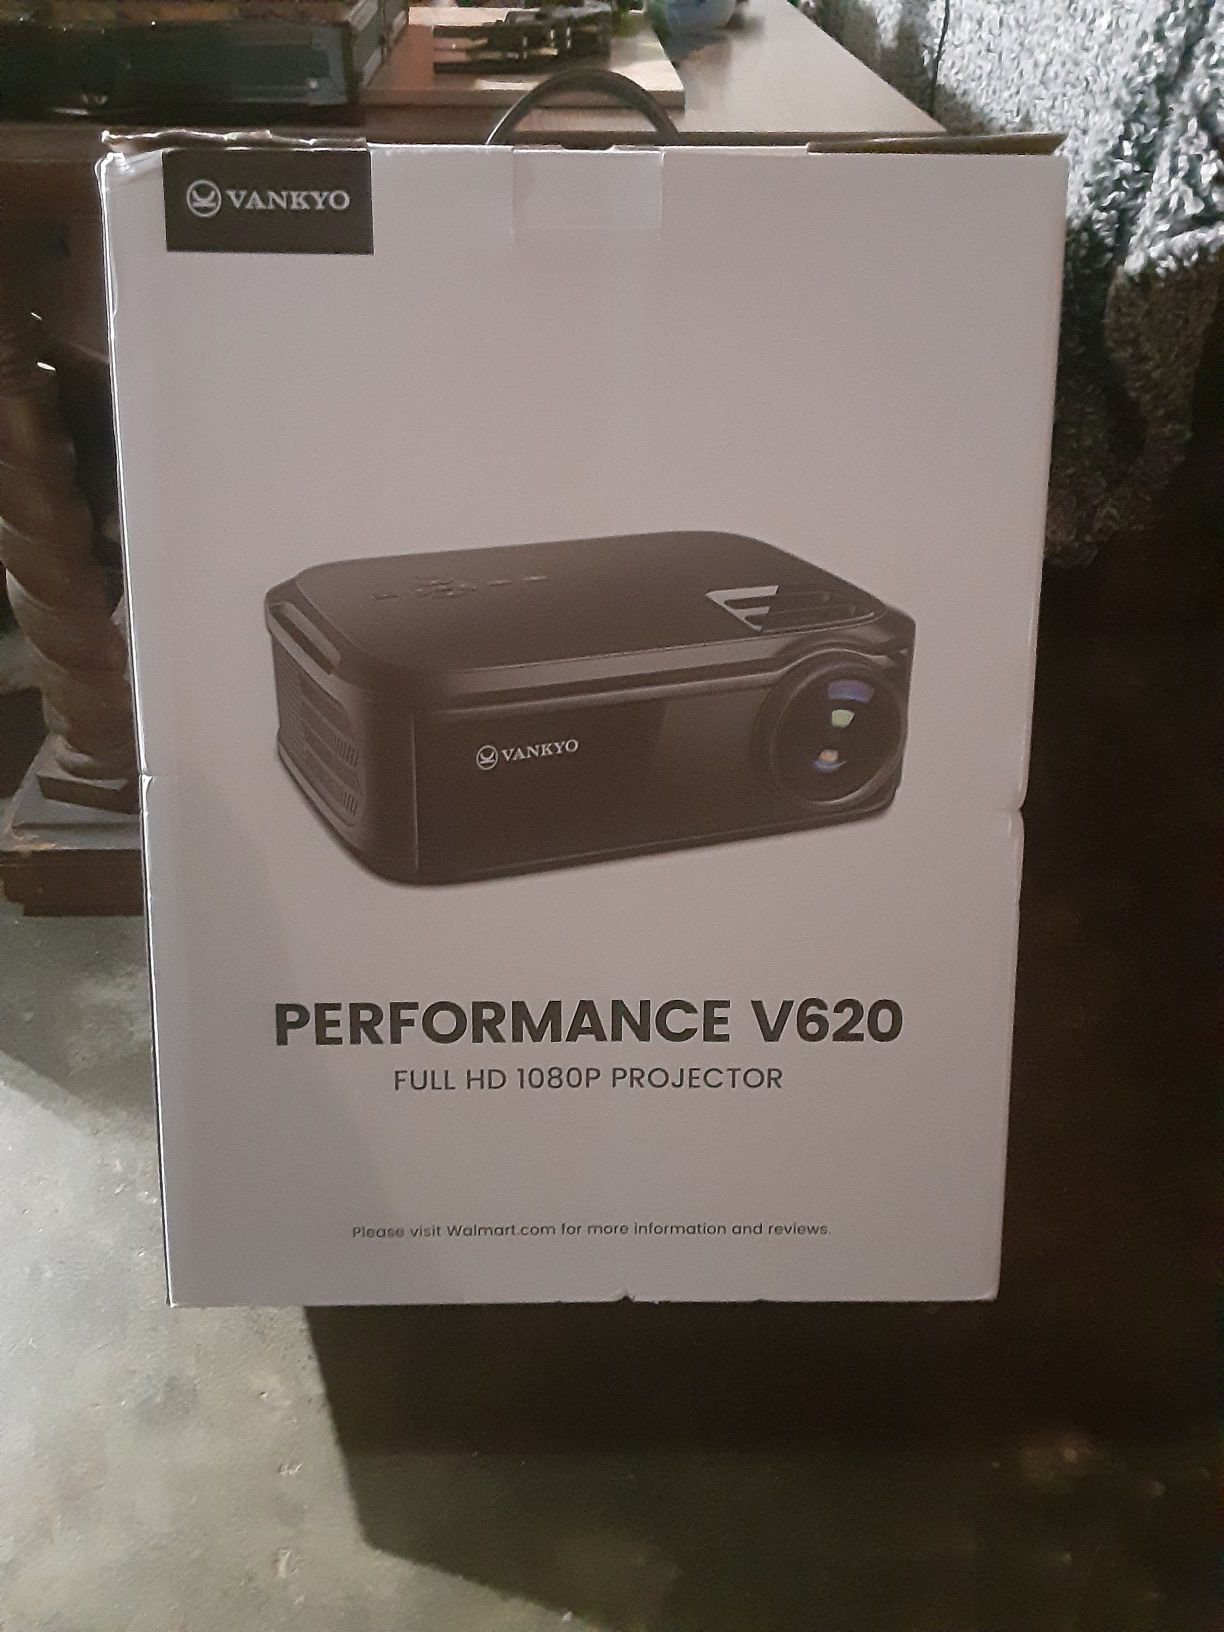 VANKYO performance V620, full HD 1080P projector.